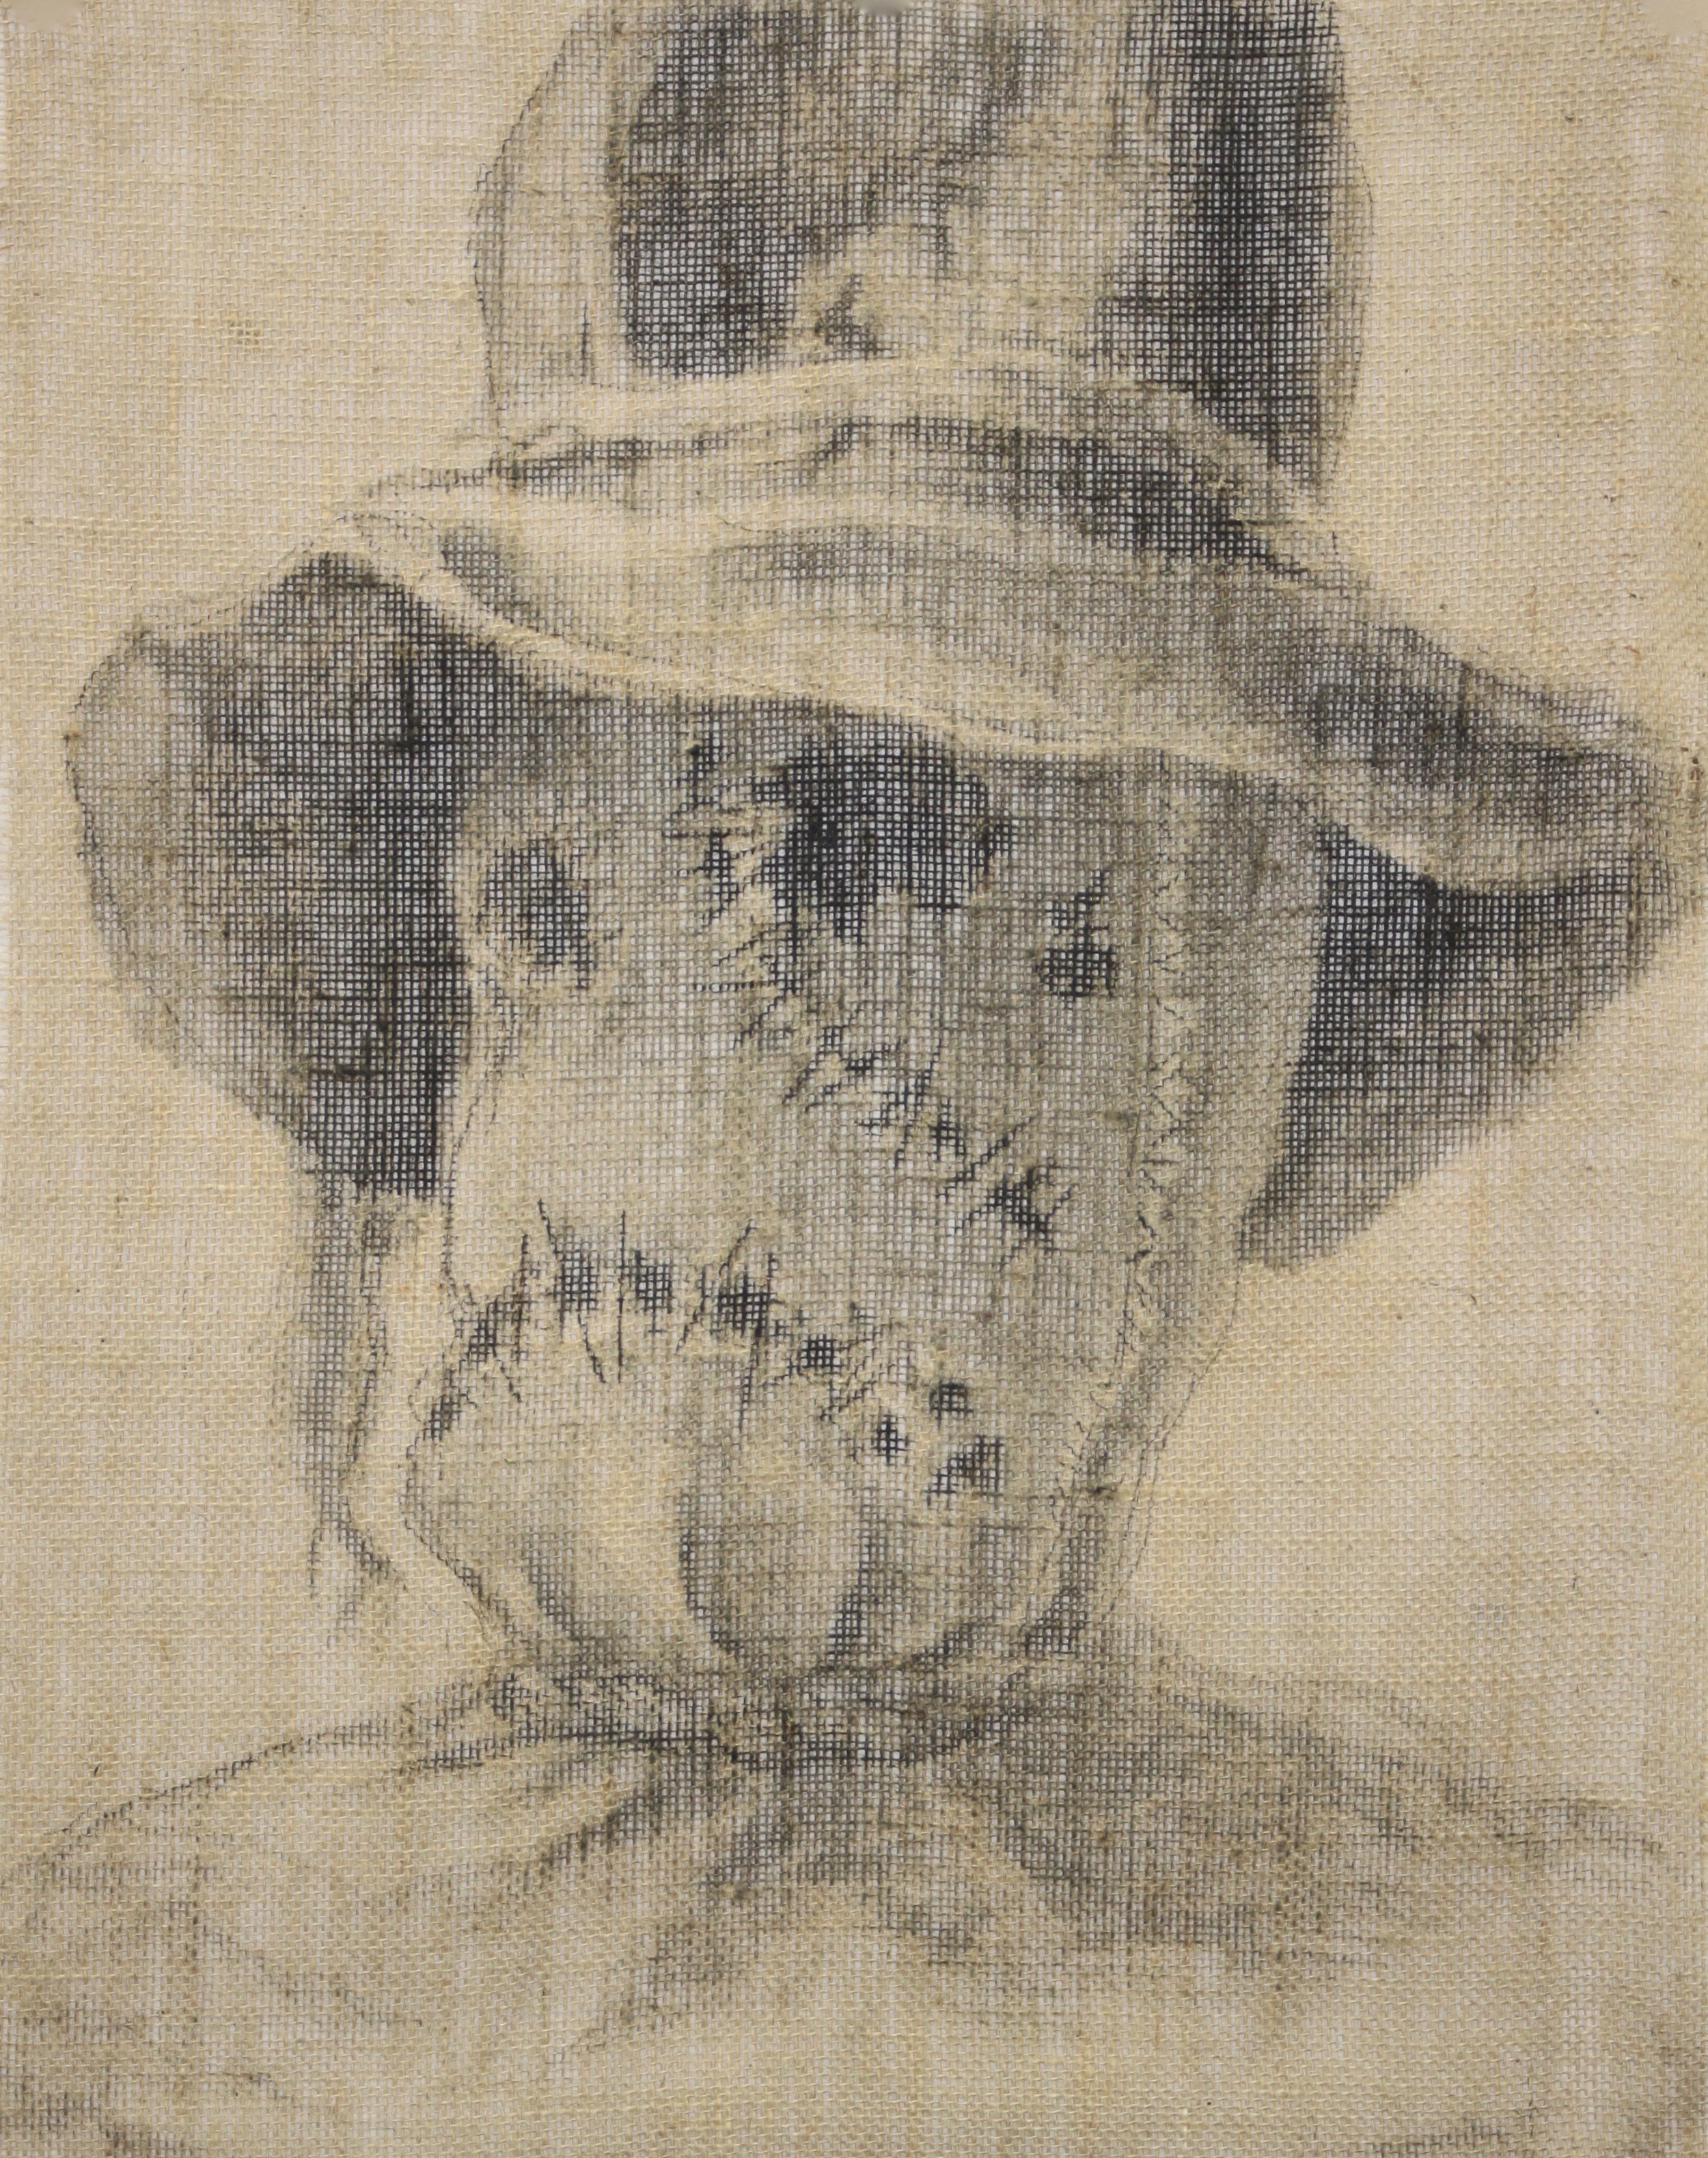 Scarecrow: 2